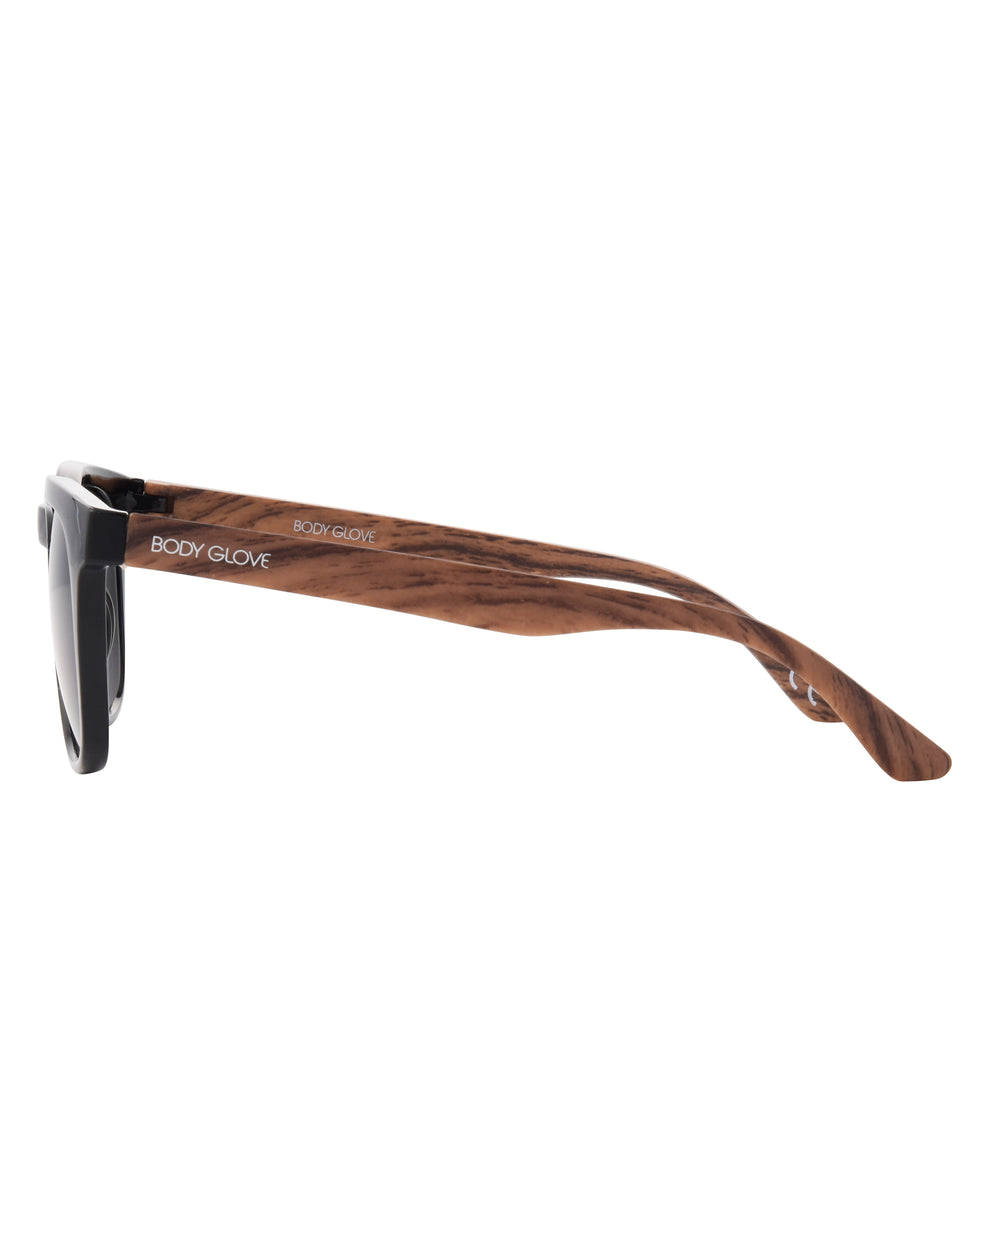 Maxwell Square Sunglasses - Black/Dark Wood - Body Glove